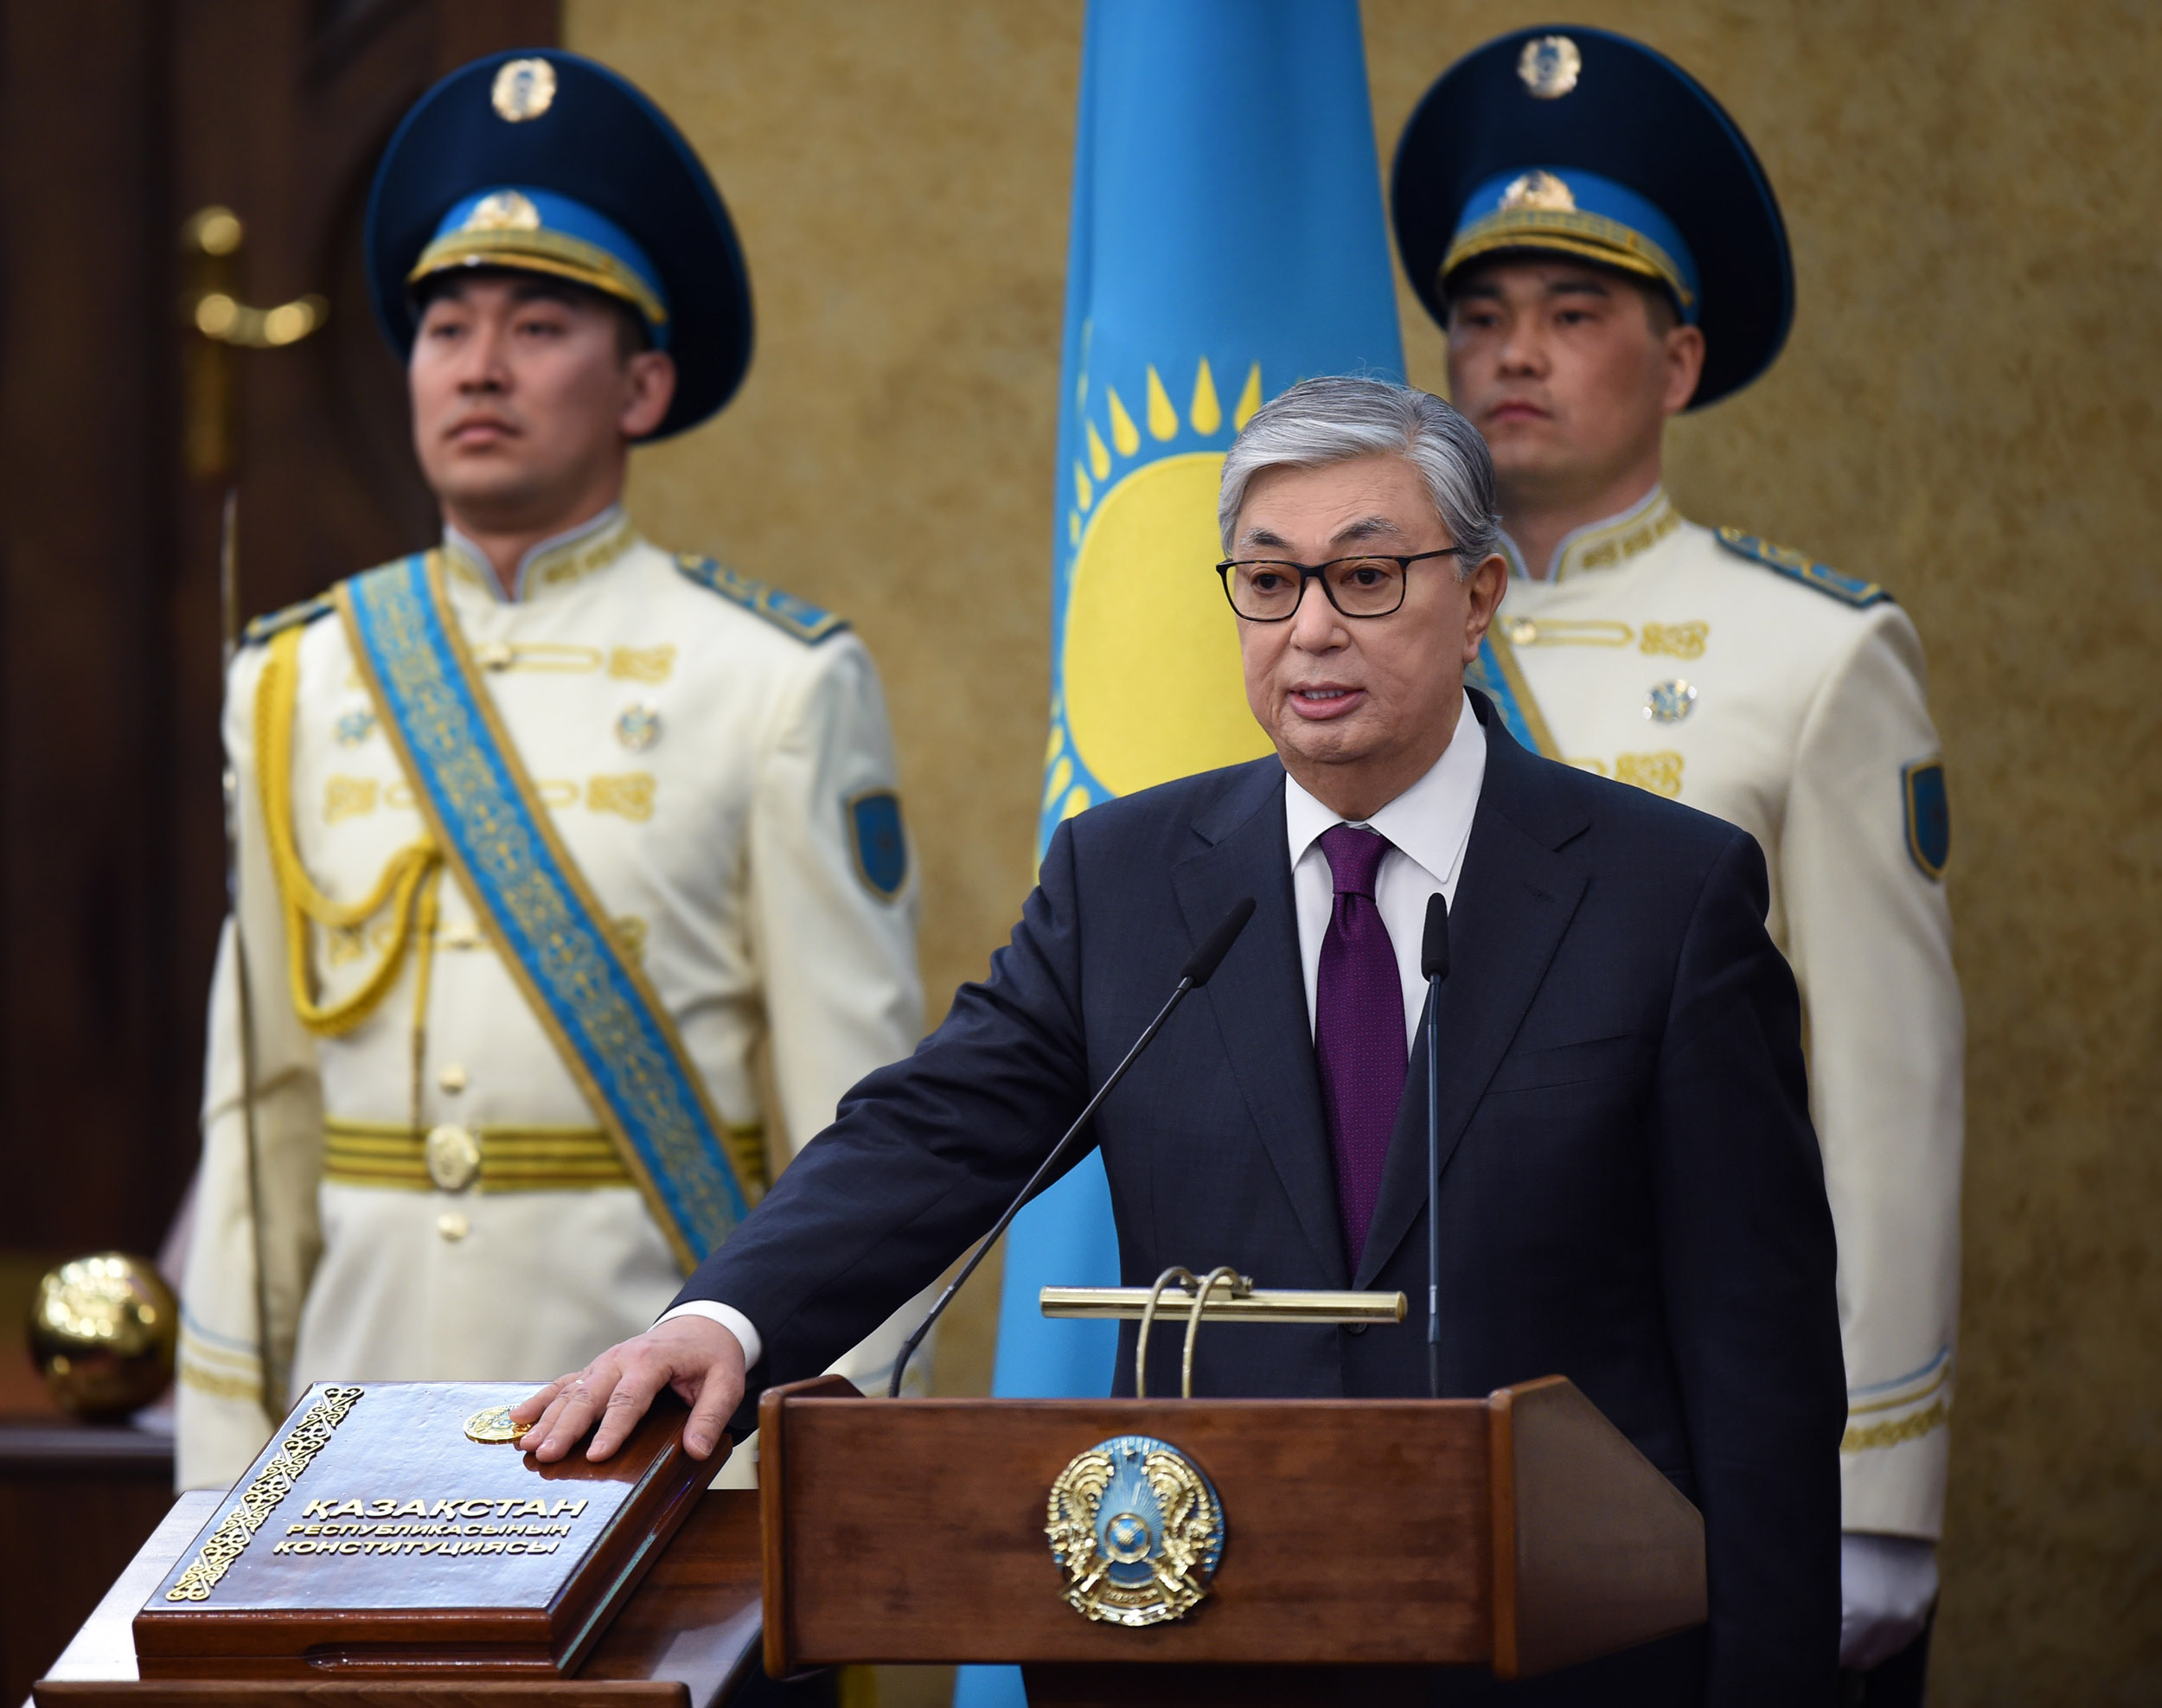 Qasym-Jomart Toqaev takes office as President of Kazakhstan